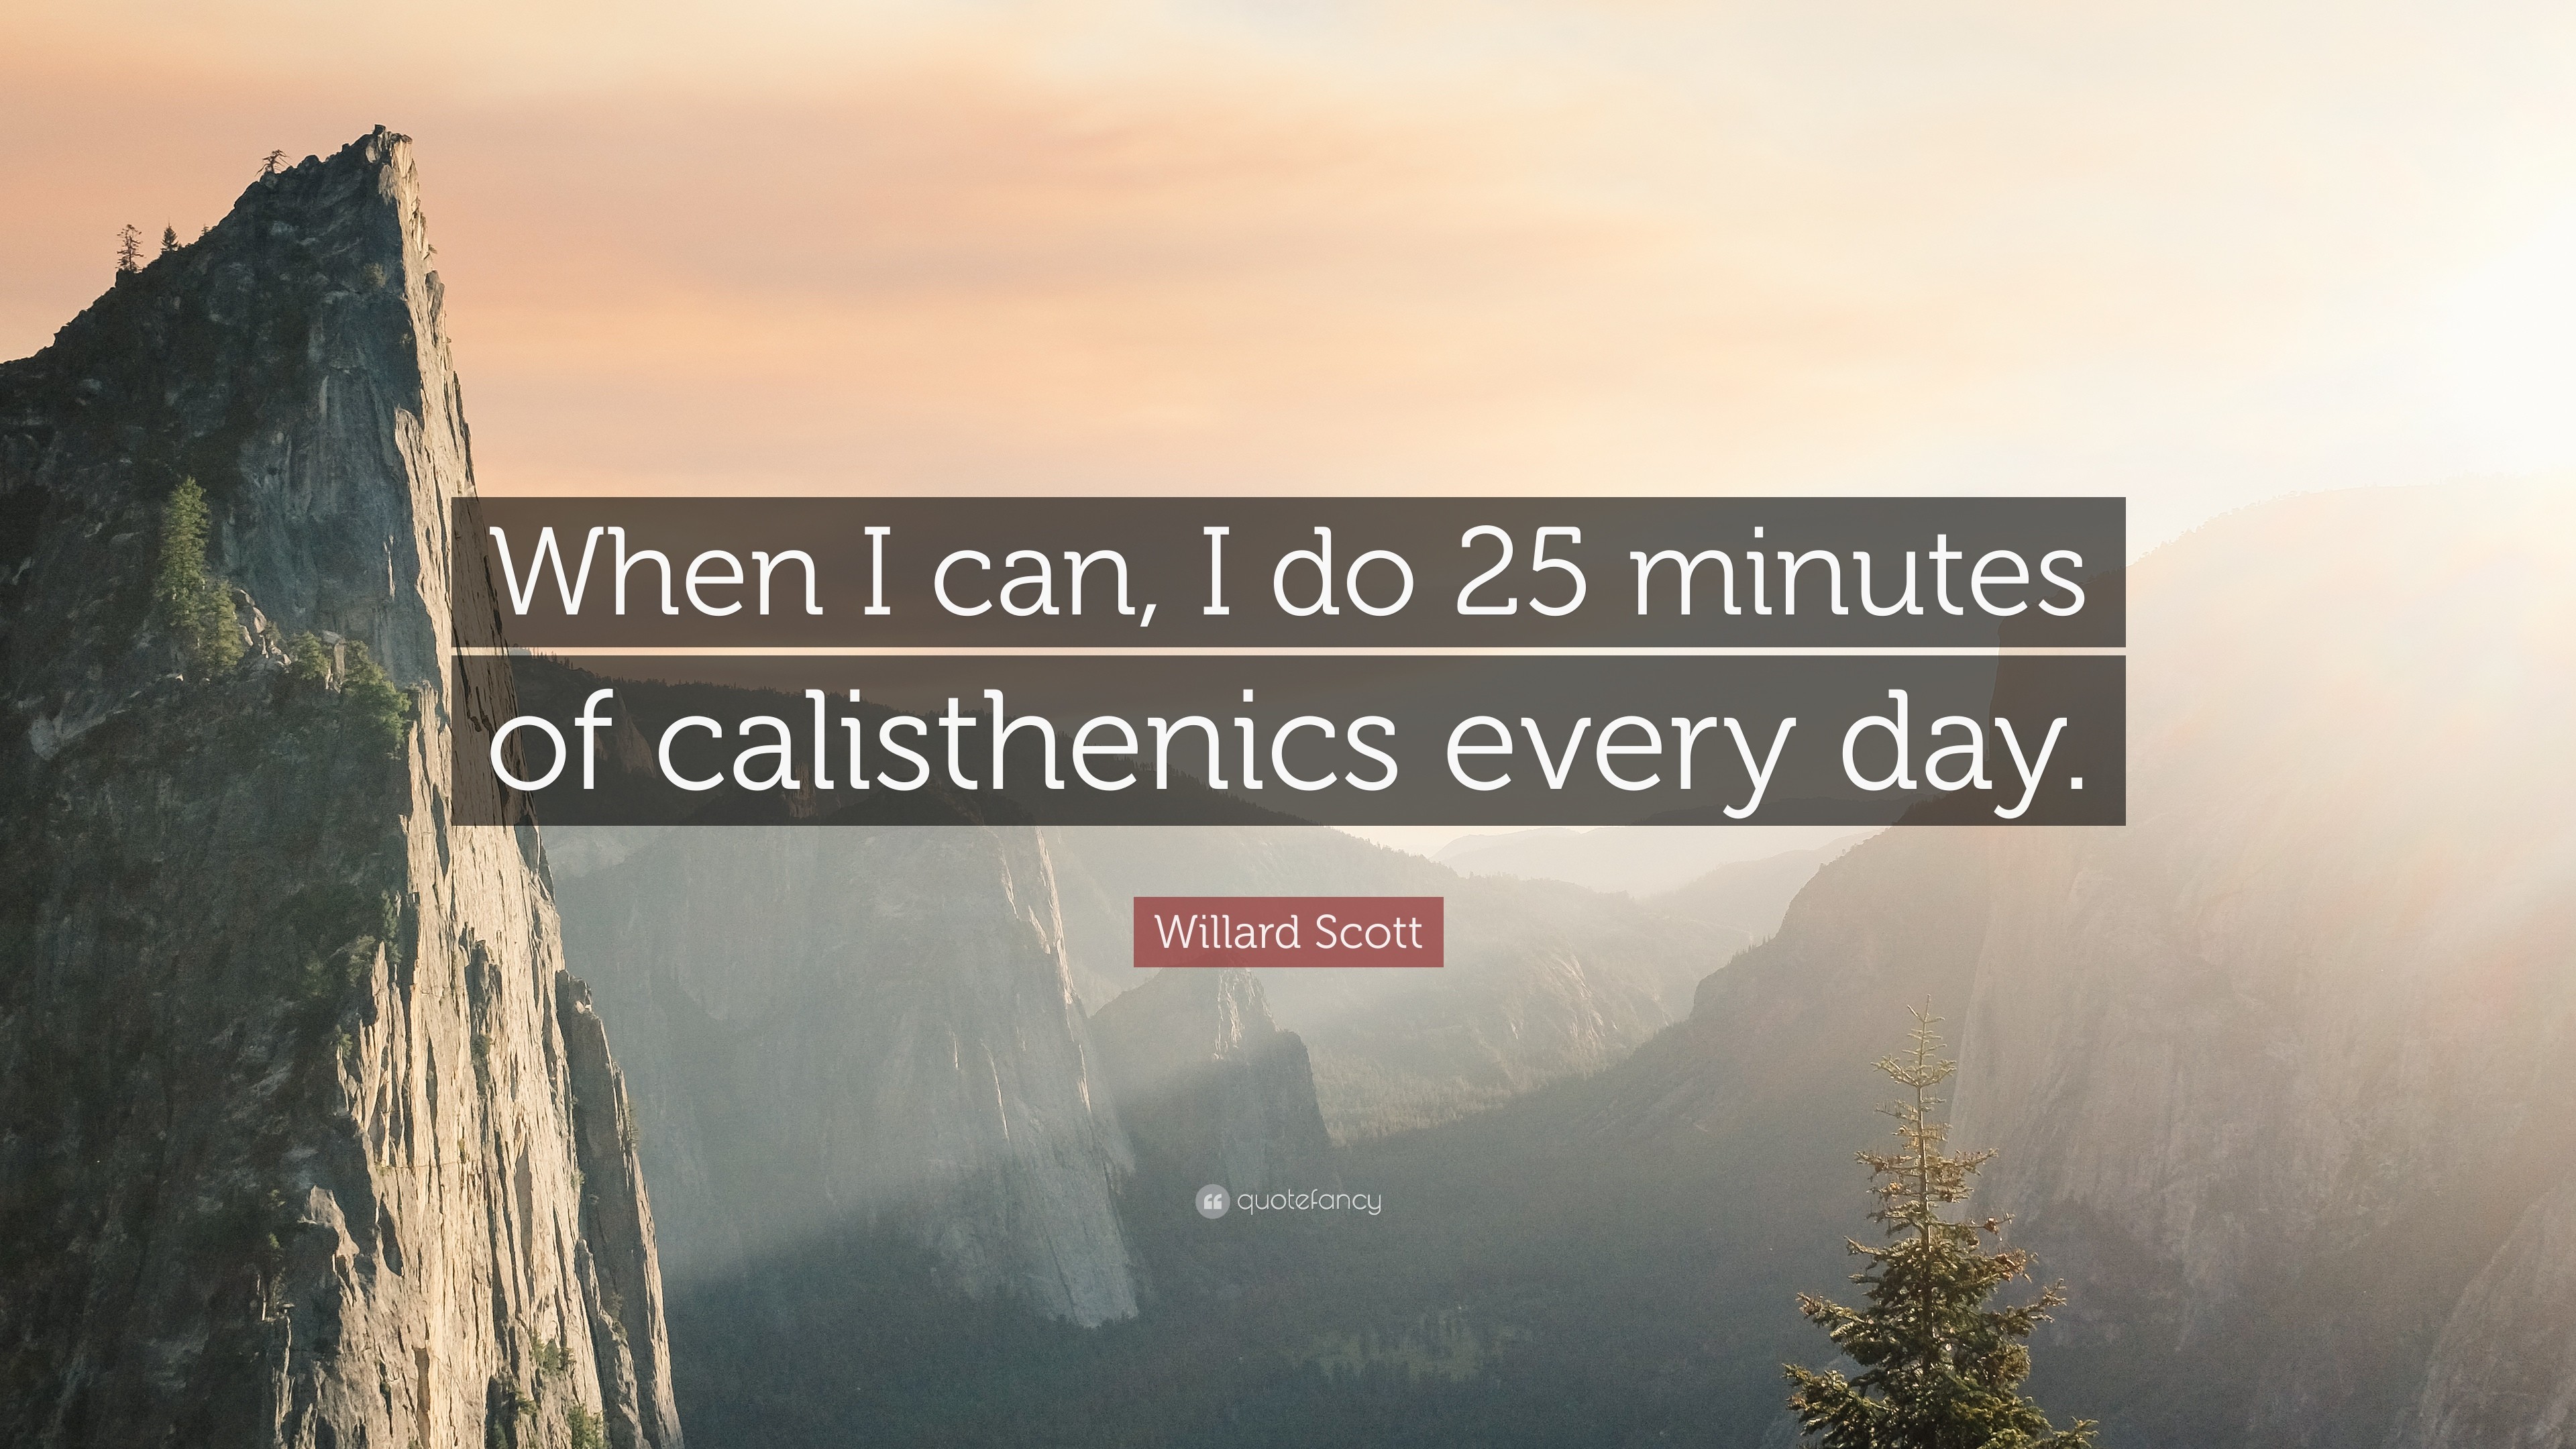 3840x2160 Willard Scott Quote: “When I can, I do 25 minutes of calisthenics every